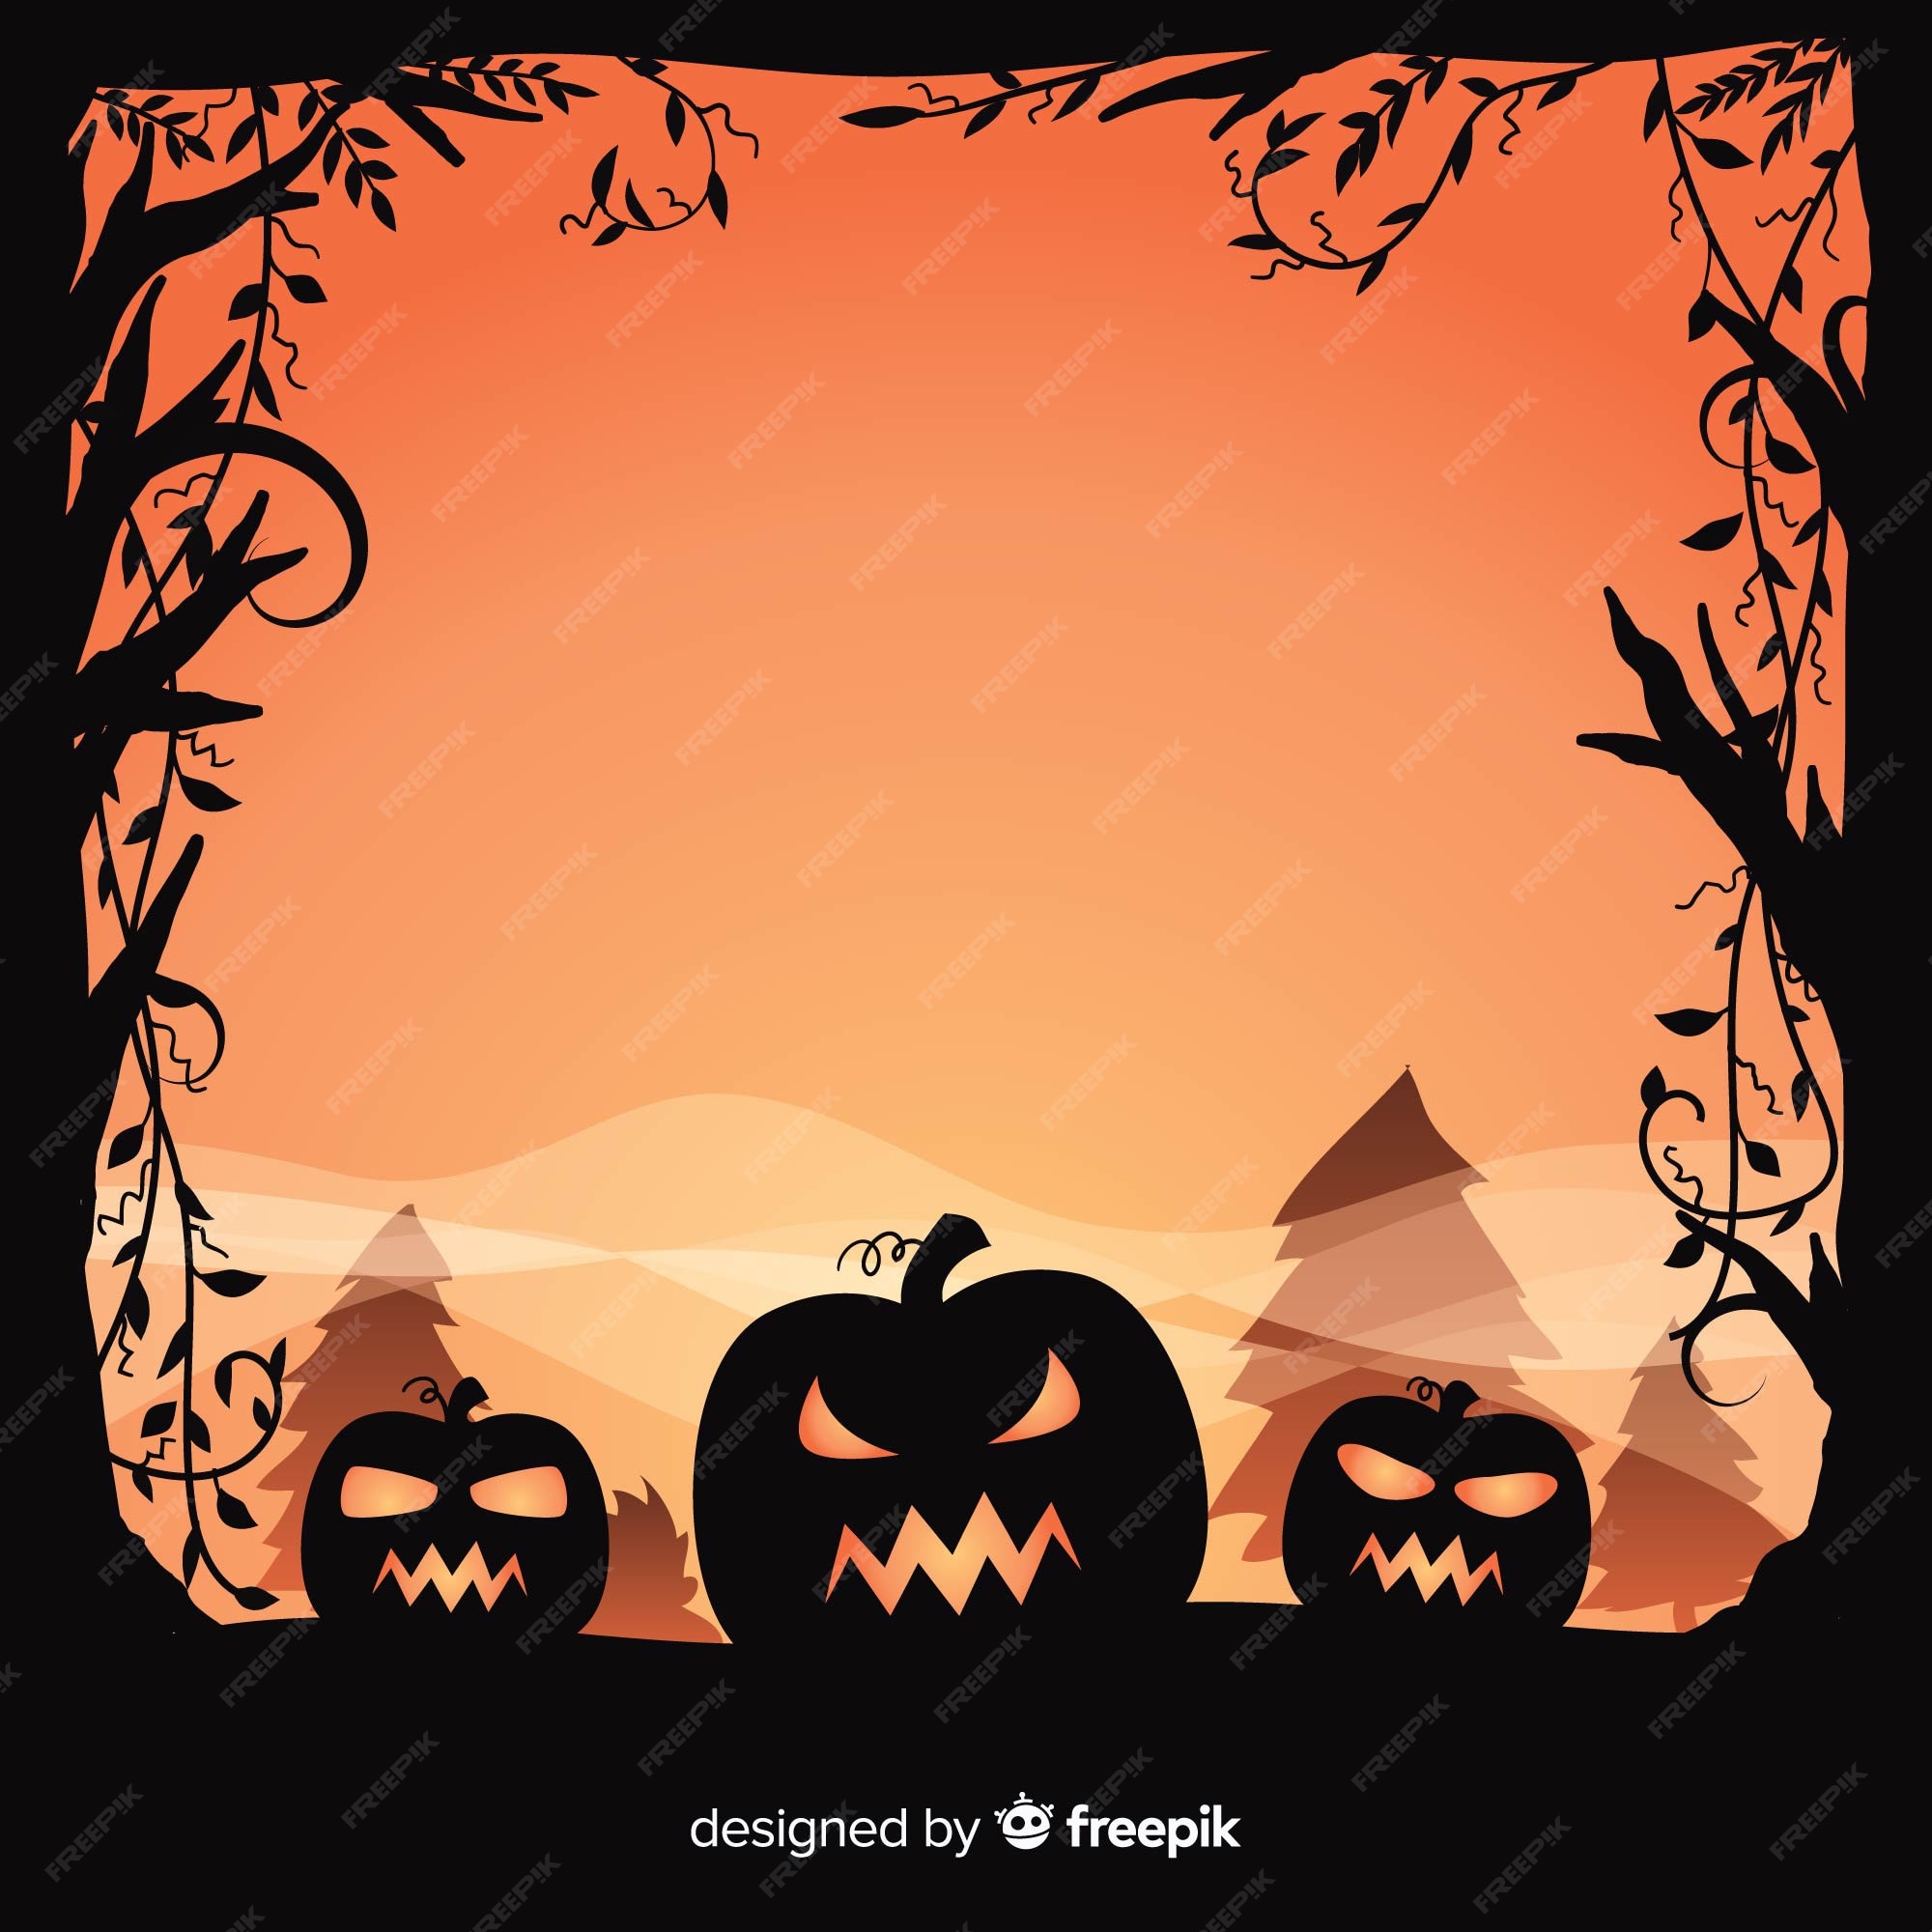 Free Vector | Halloween background design with spooky pumpkins